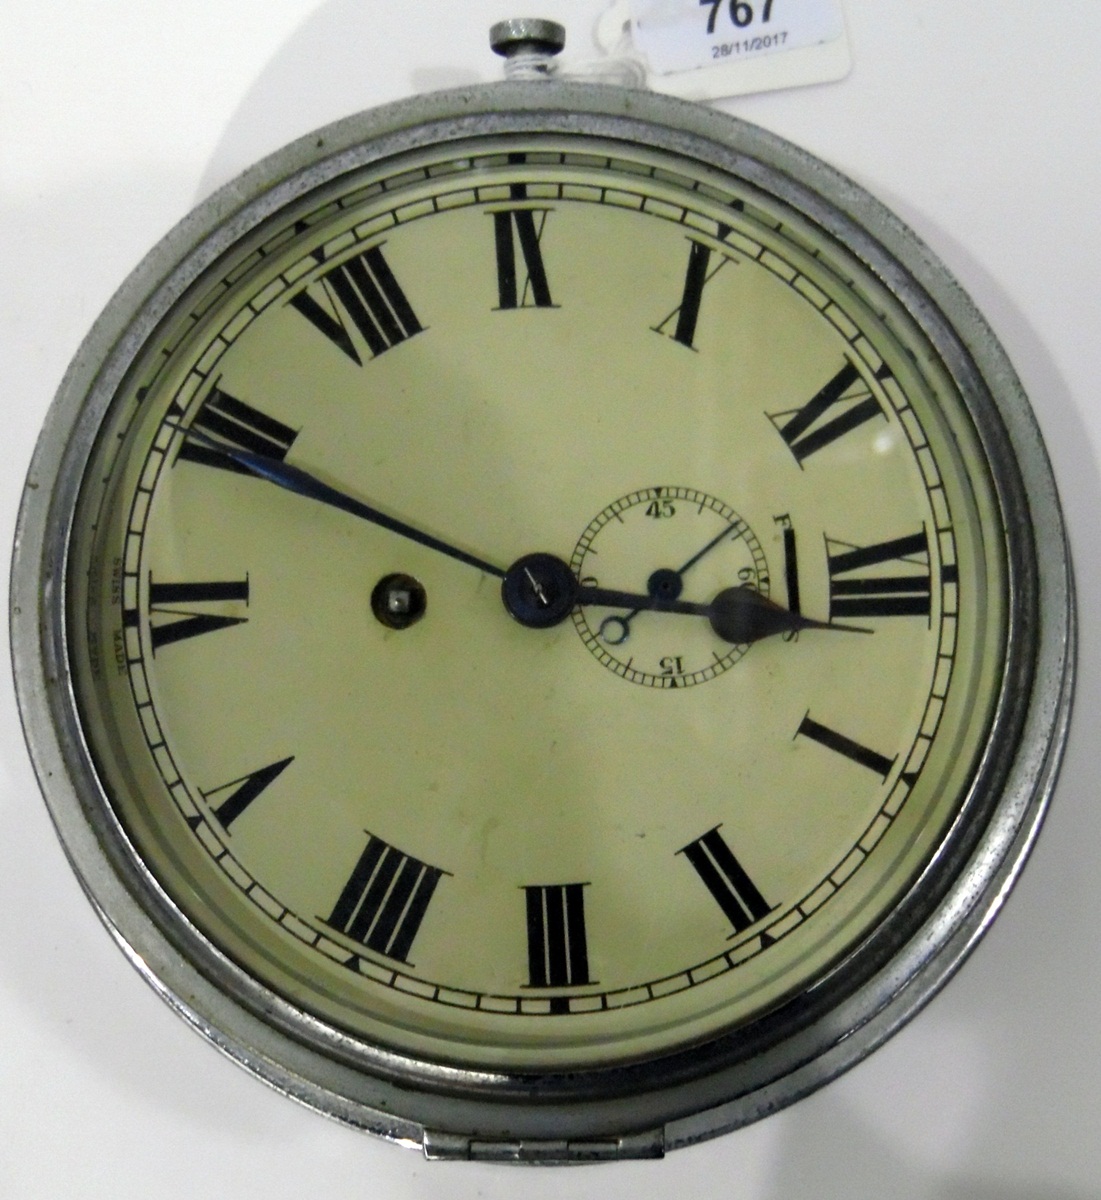 20th century circular wall clock, silver-coloured metal, Roman numeral dial,